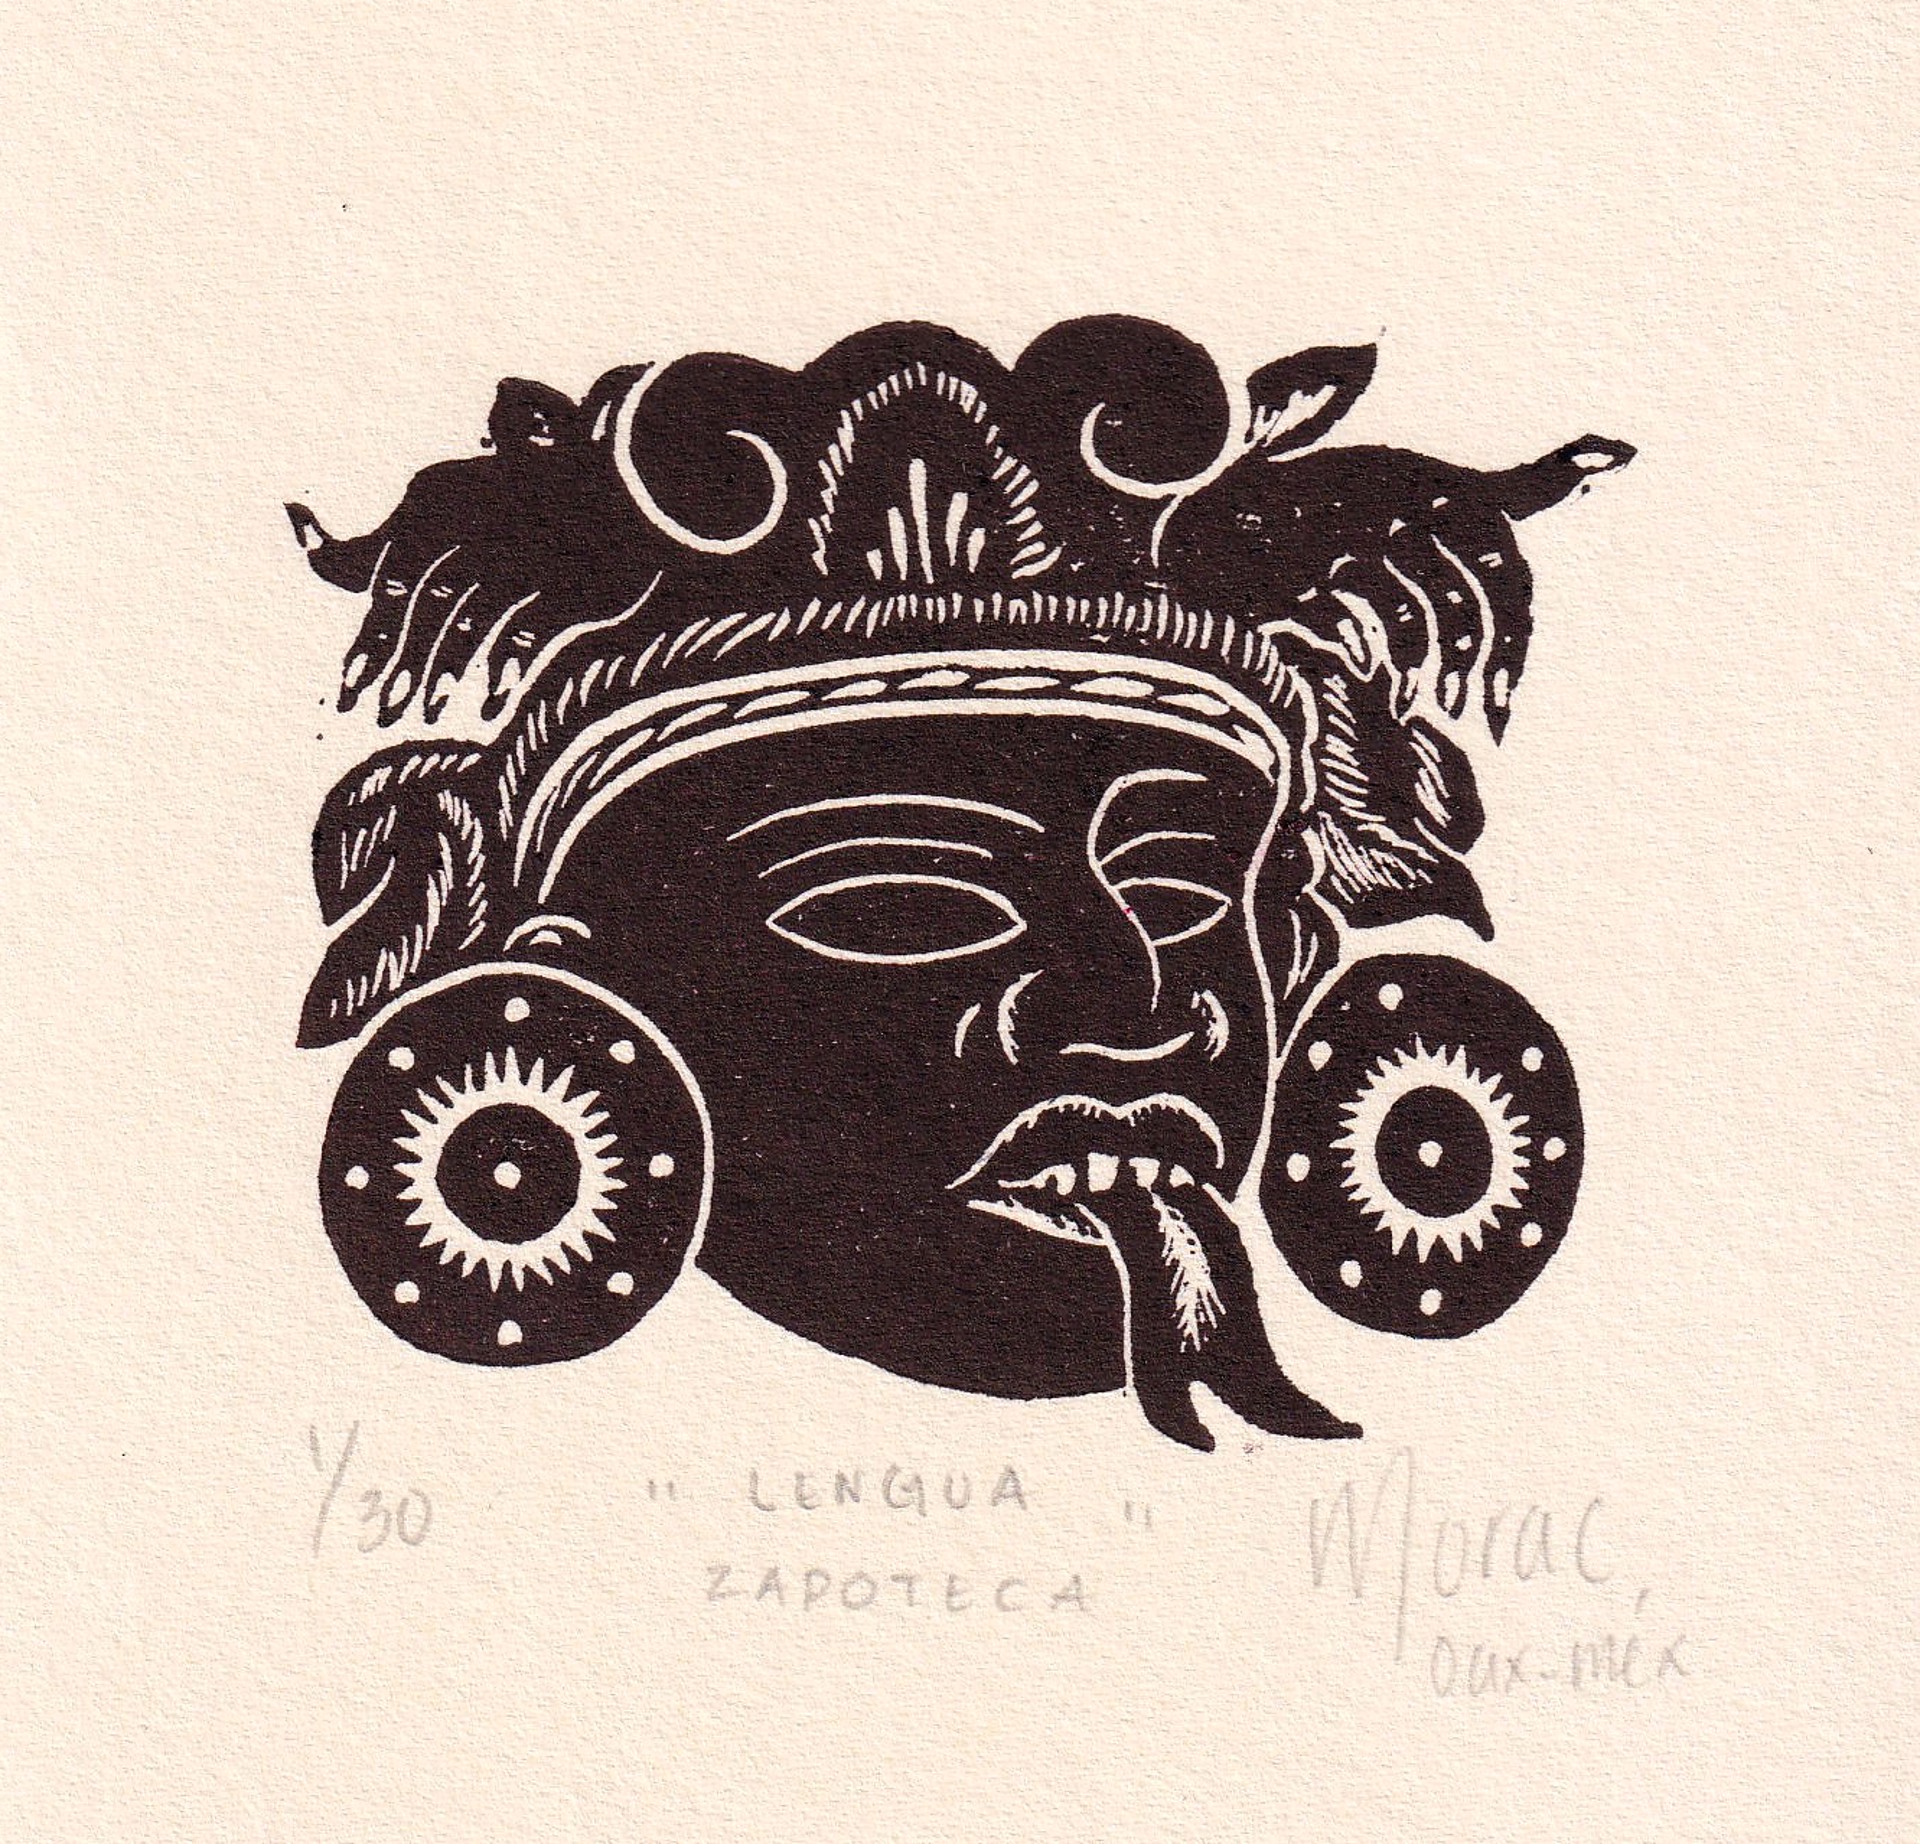 Lengua Zapoteca by Gabriela Morac